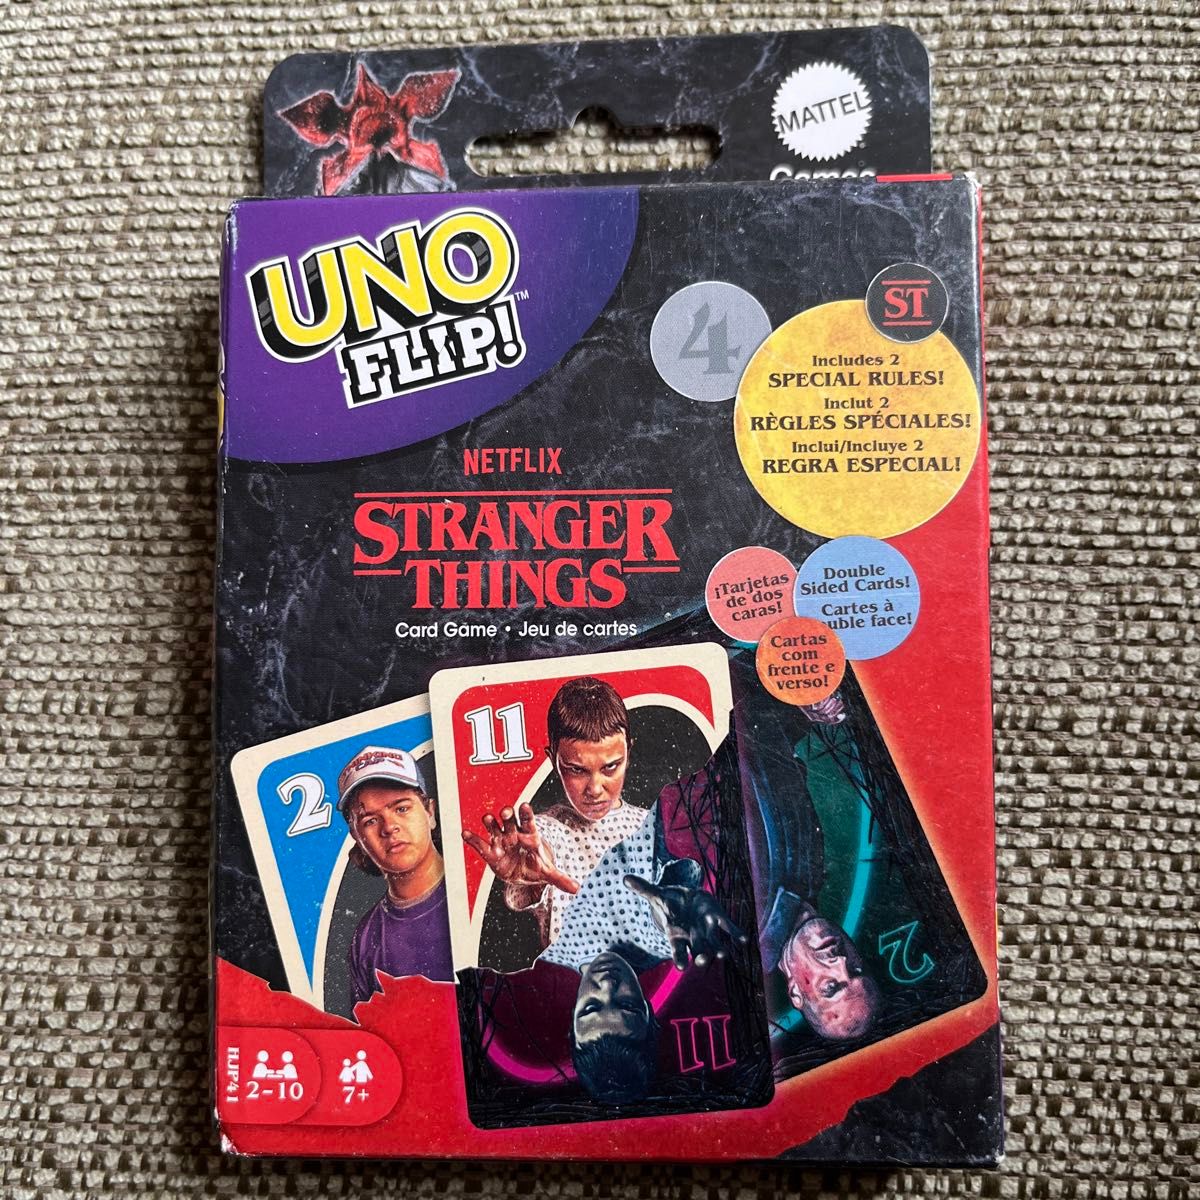 Stranger things UNO FLIP! ［ストレンジャーシングス ］カードゲーム